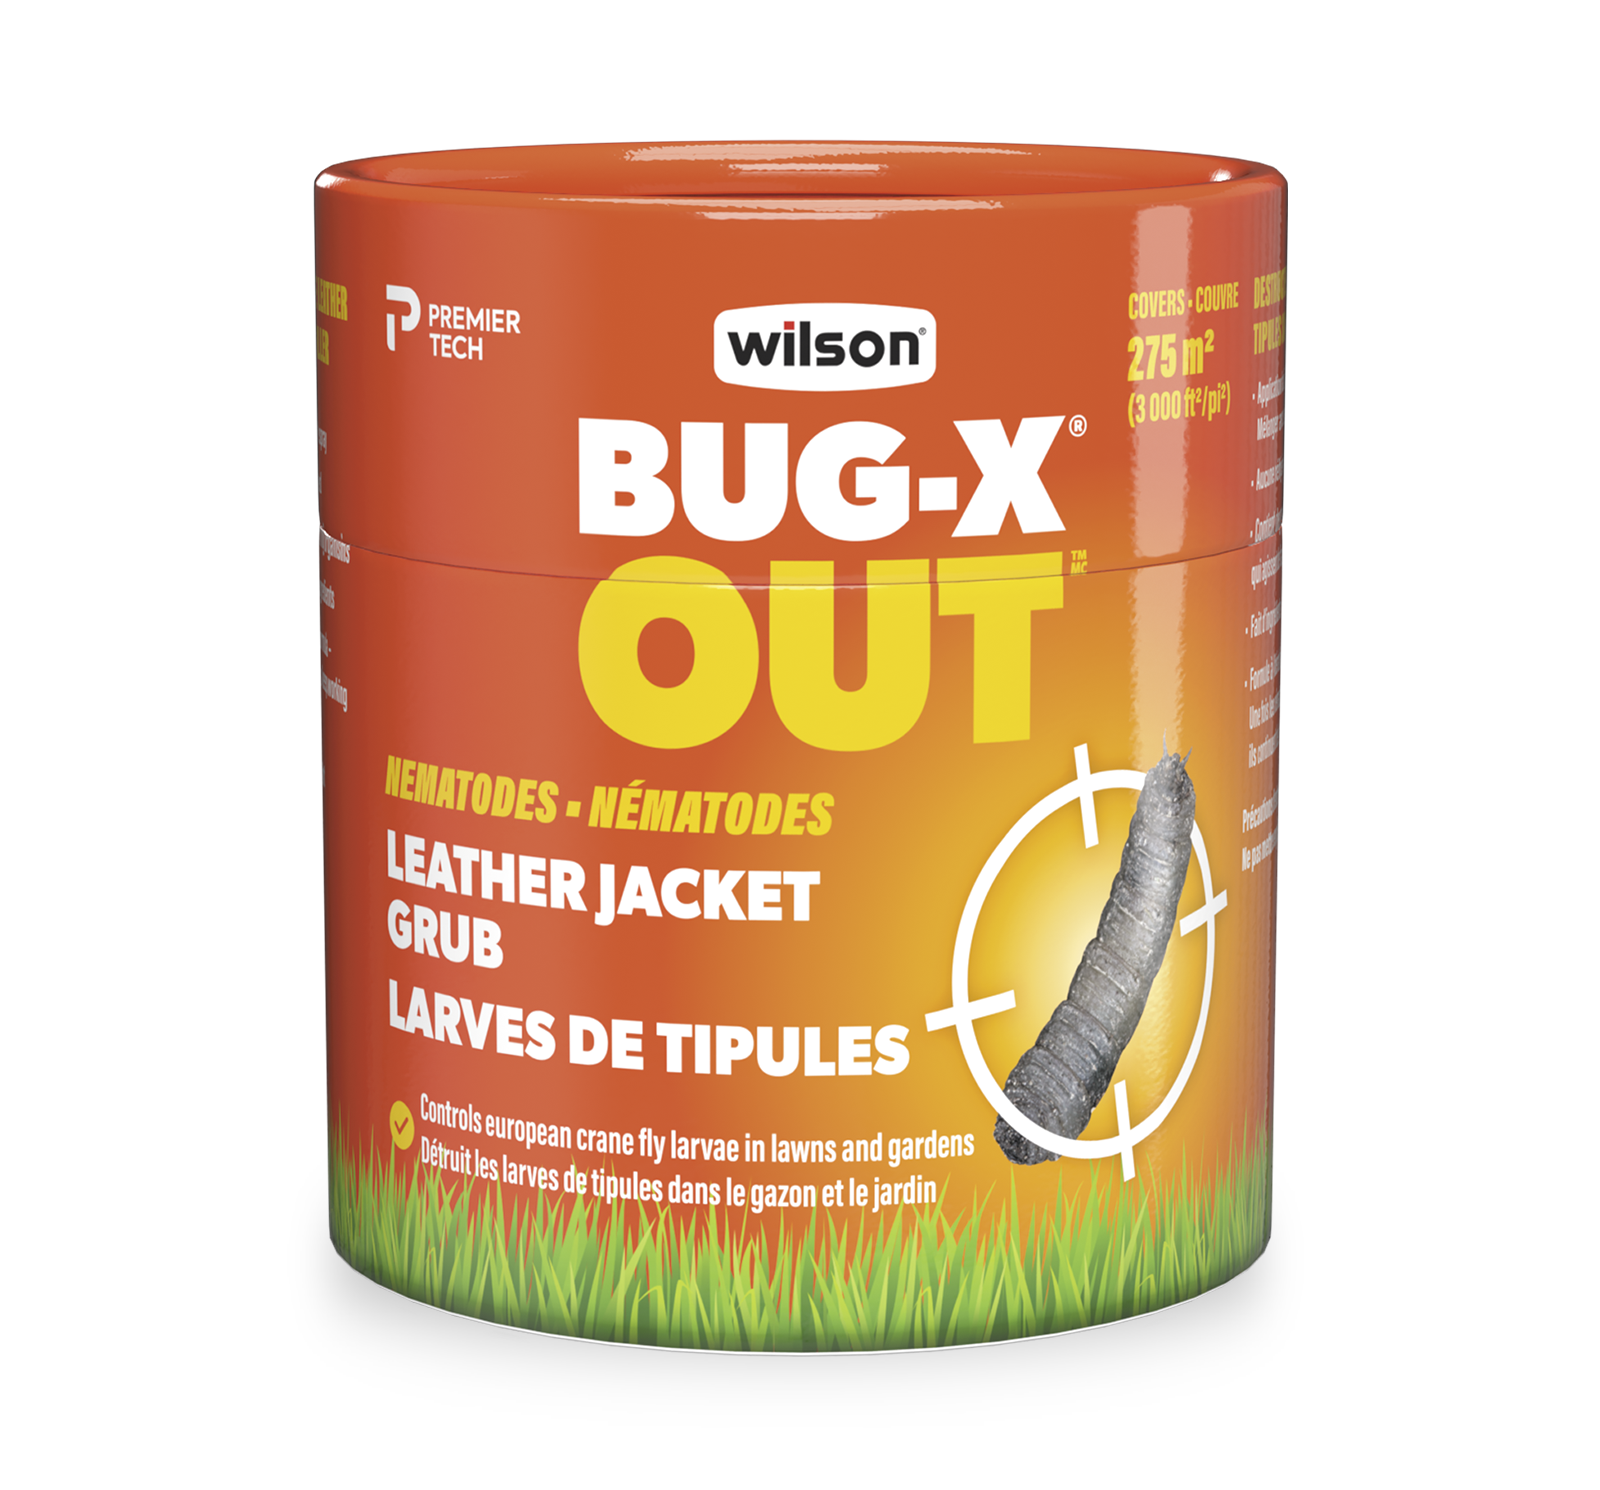 wilson-bugx-out-nematodes-leather-jacket-grub-275m2